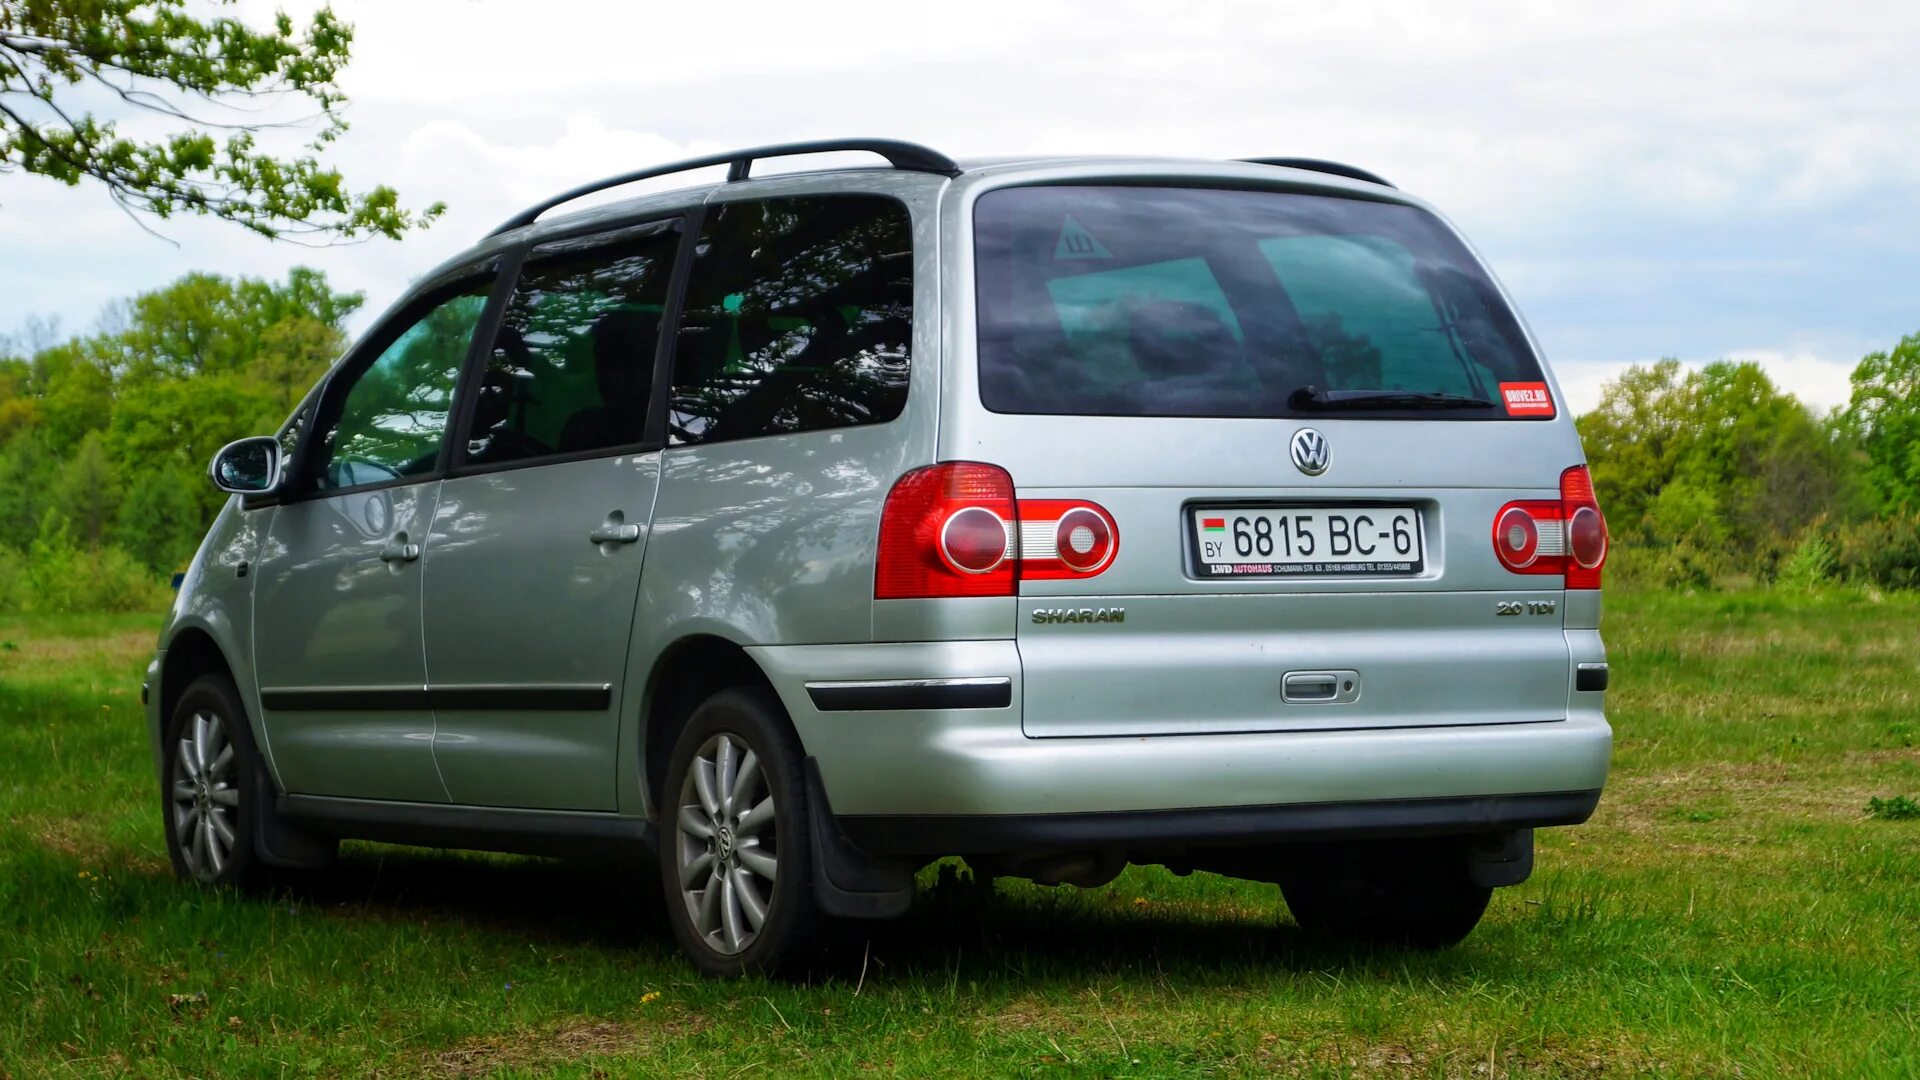 Sharan 2. Фольксваген Шаран 2006. Volkswagen Sharan дизель 1 поколение. Фольксваген Шаран 2006 год.